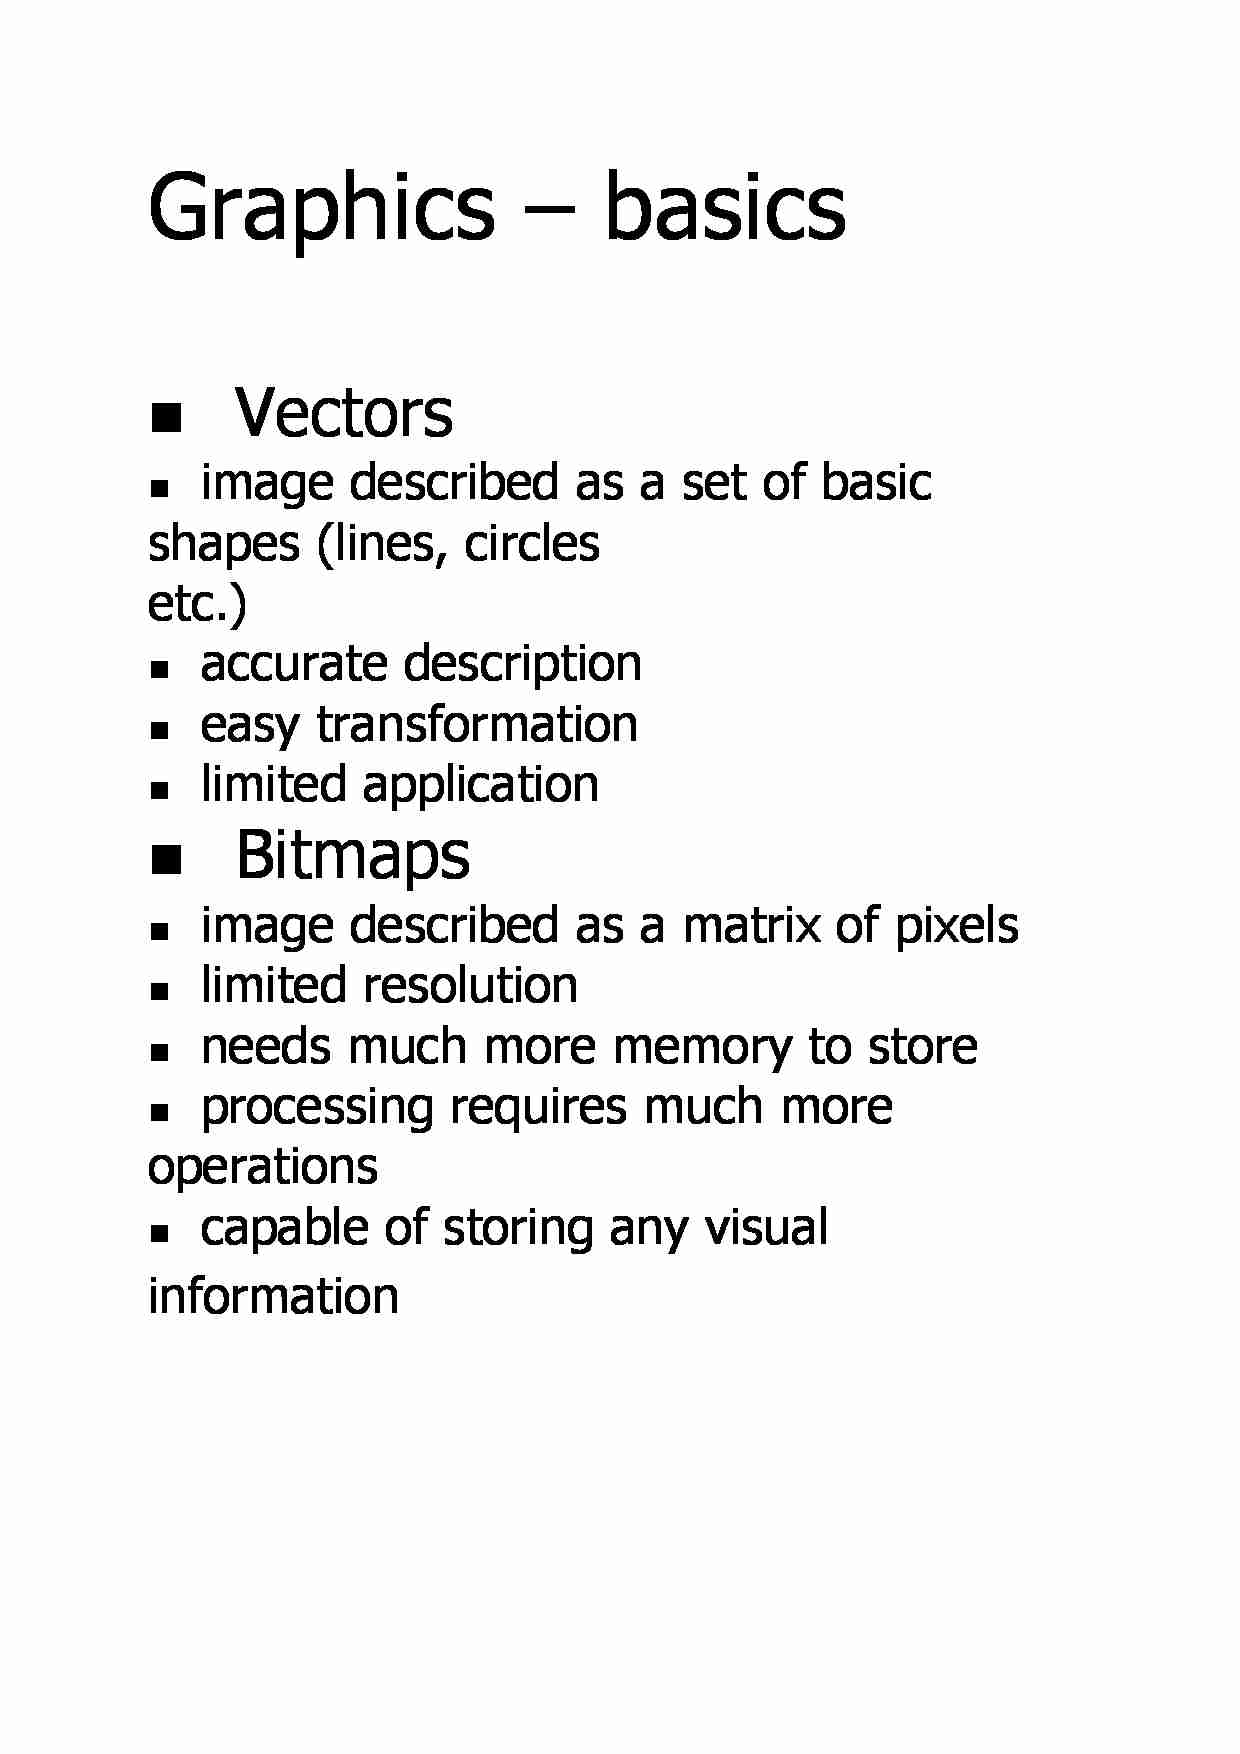 Basics of graphics - strona 1